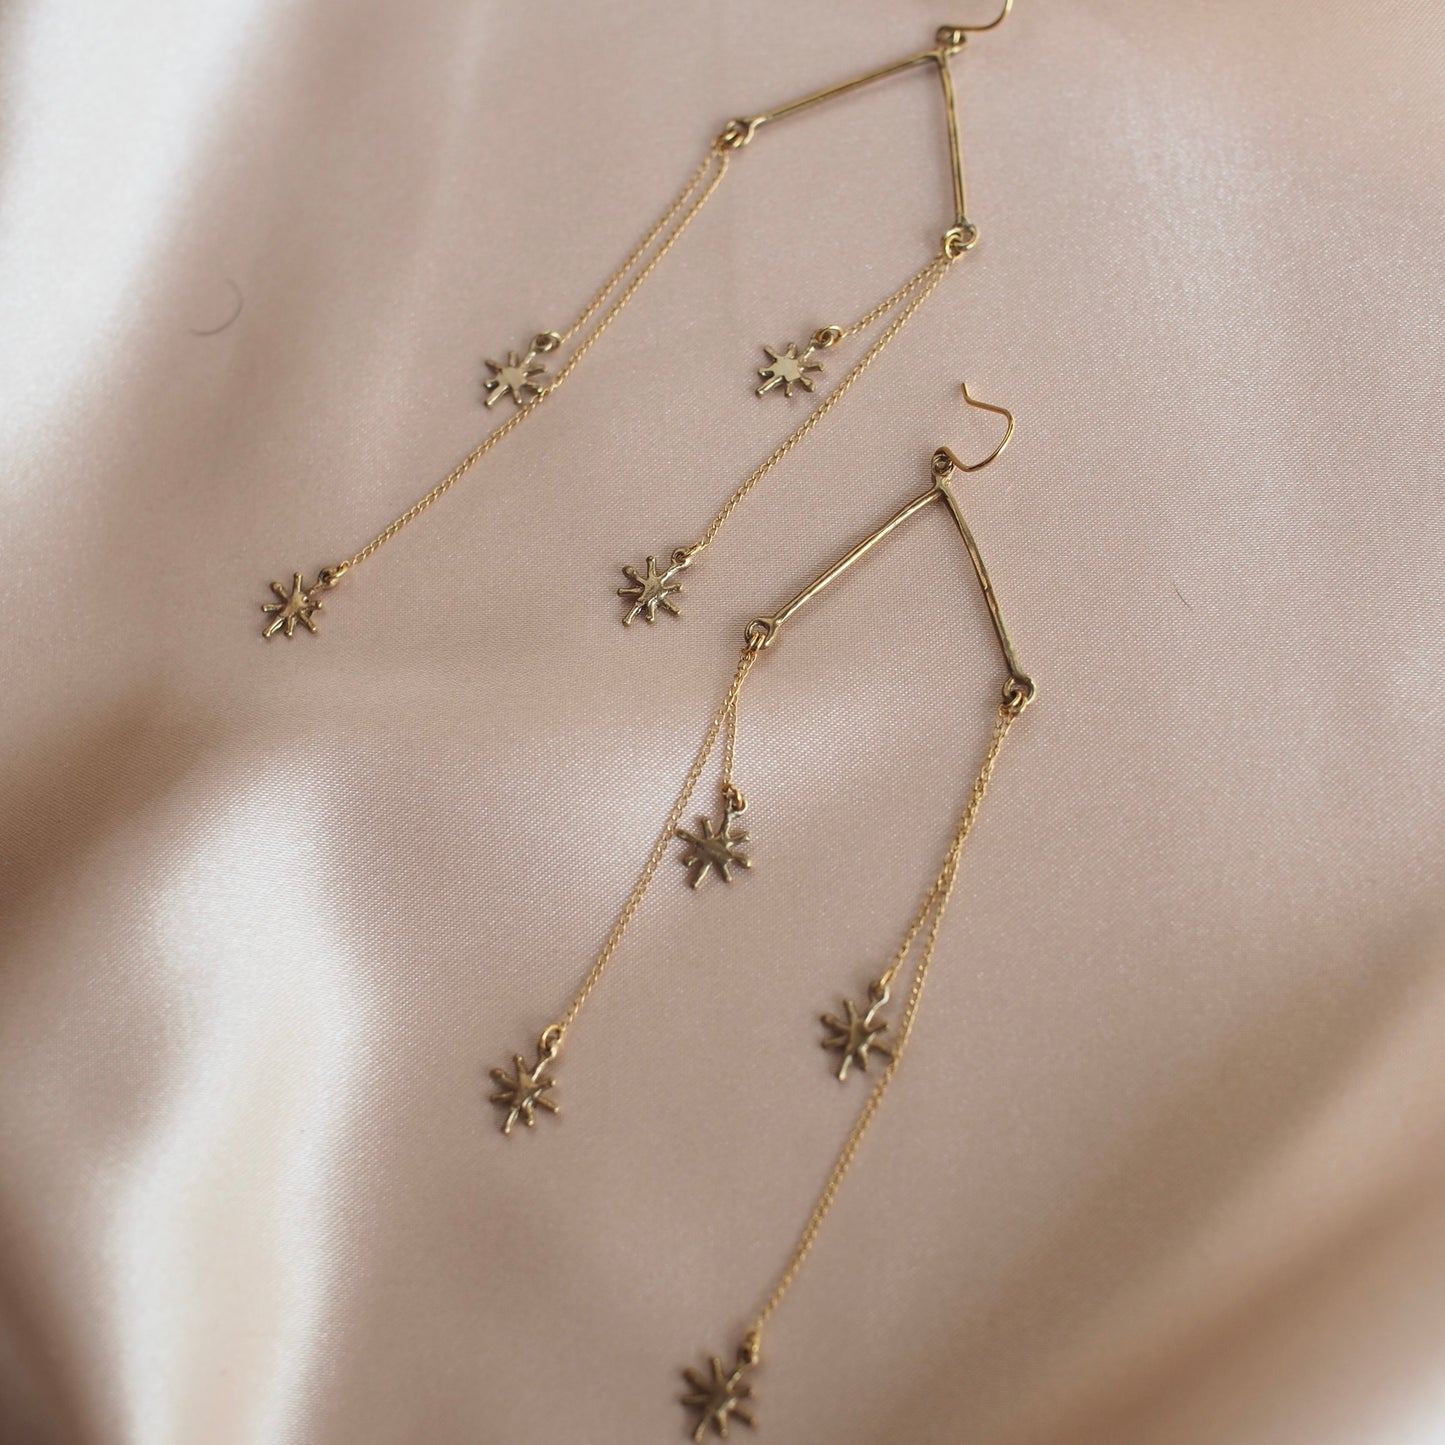 Falling star glitter earrings handmade by Iron Oxide Designs